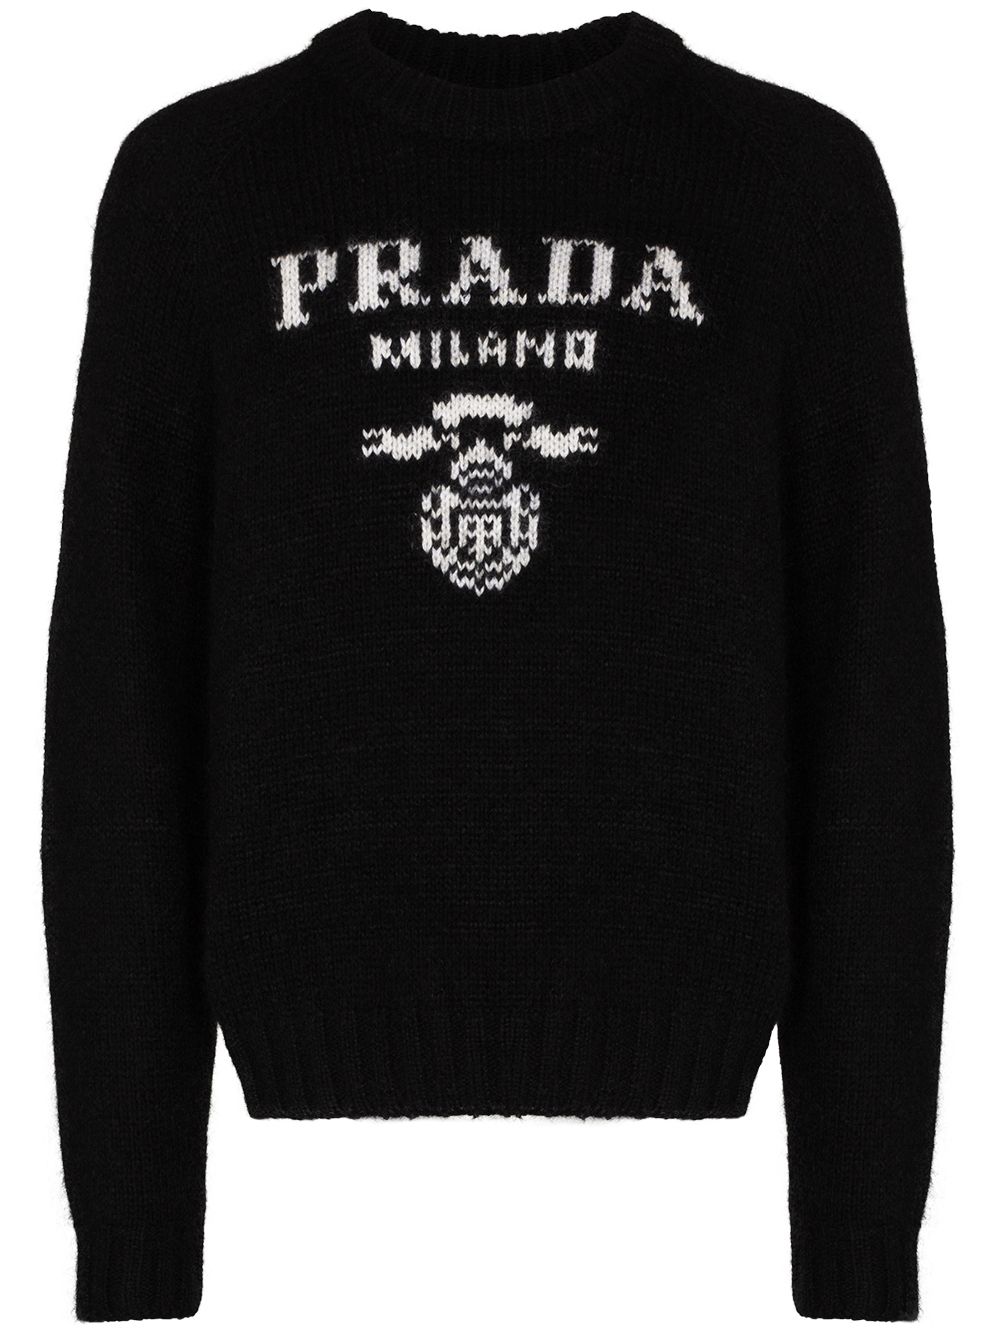 PRADA Wool and cashmere crewneck sweater